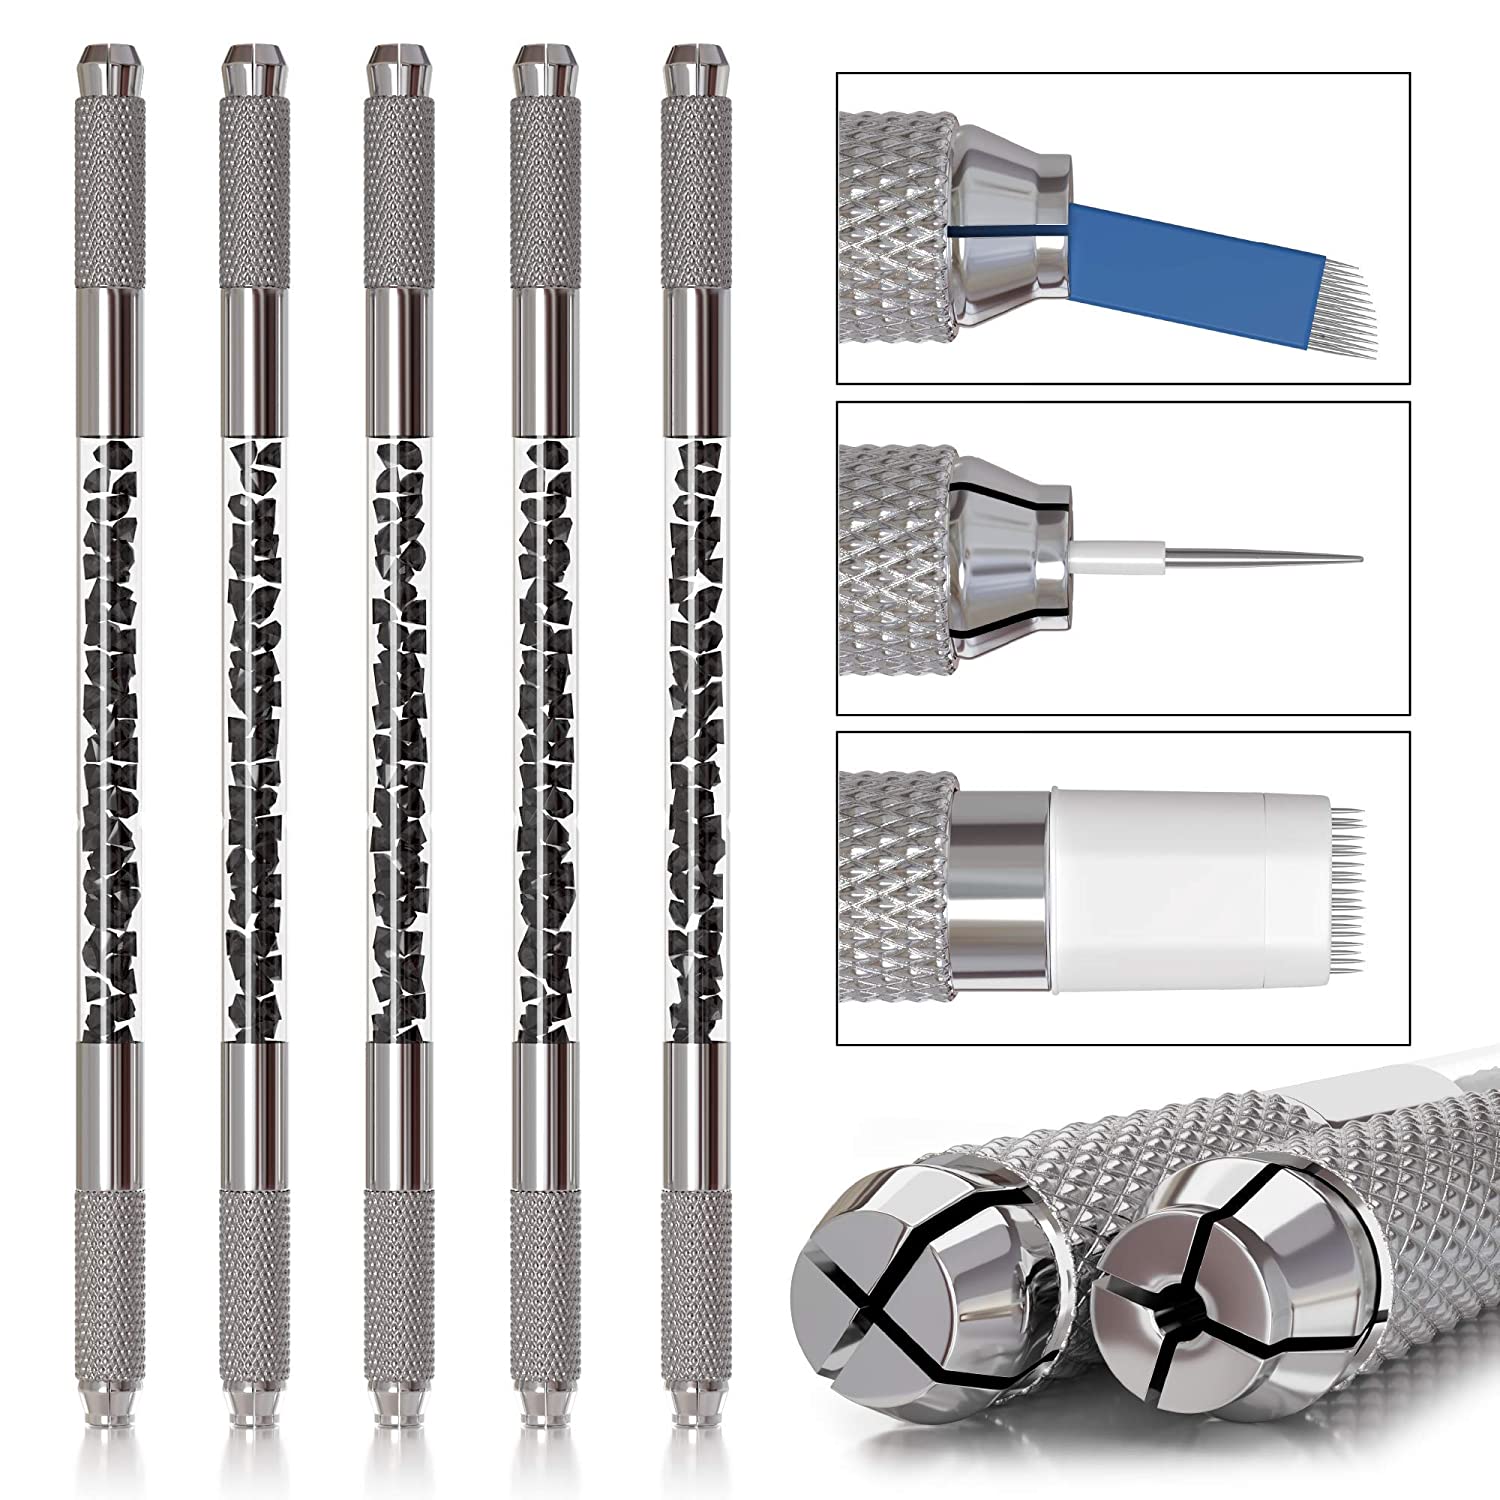 Stylia Manual Microblading Pen